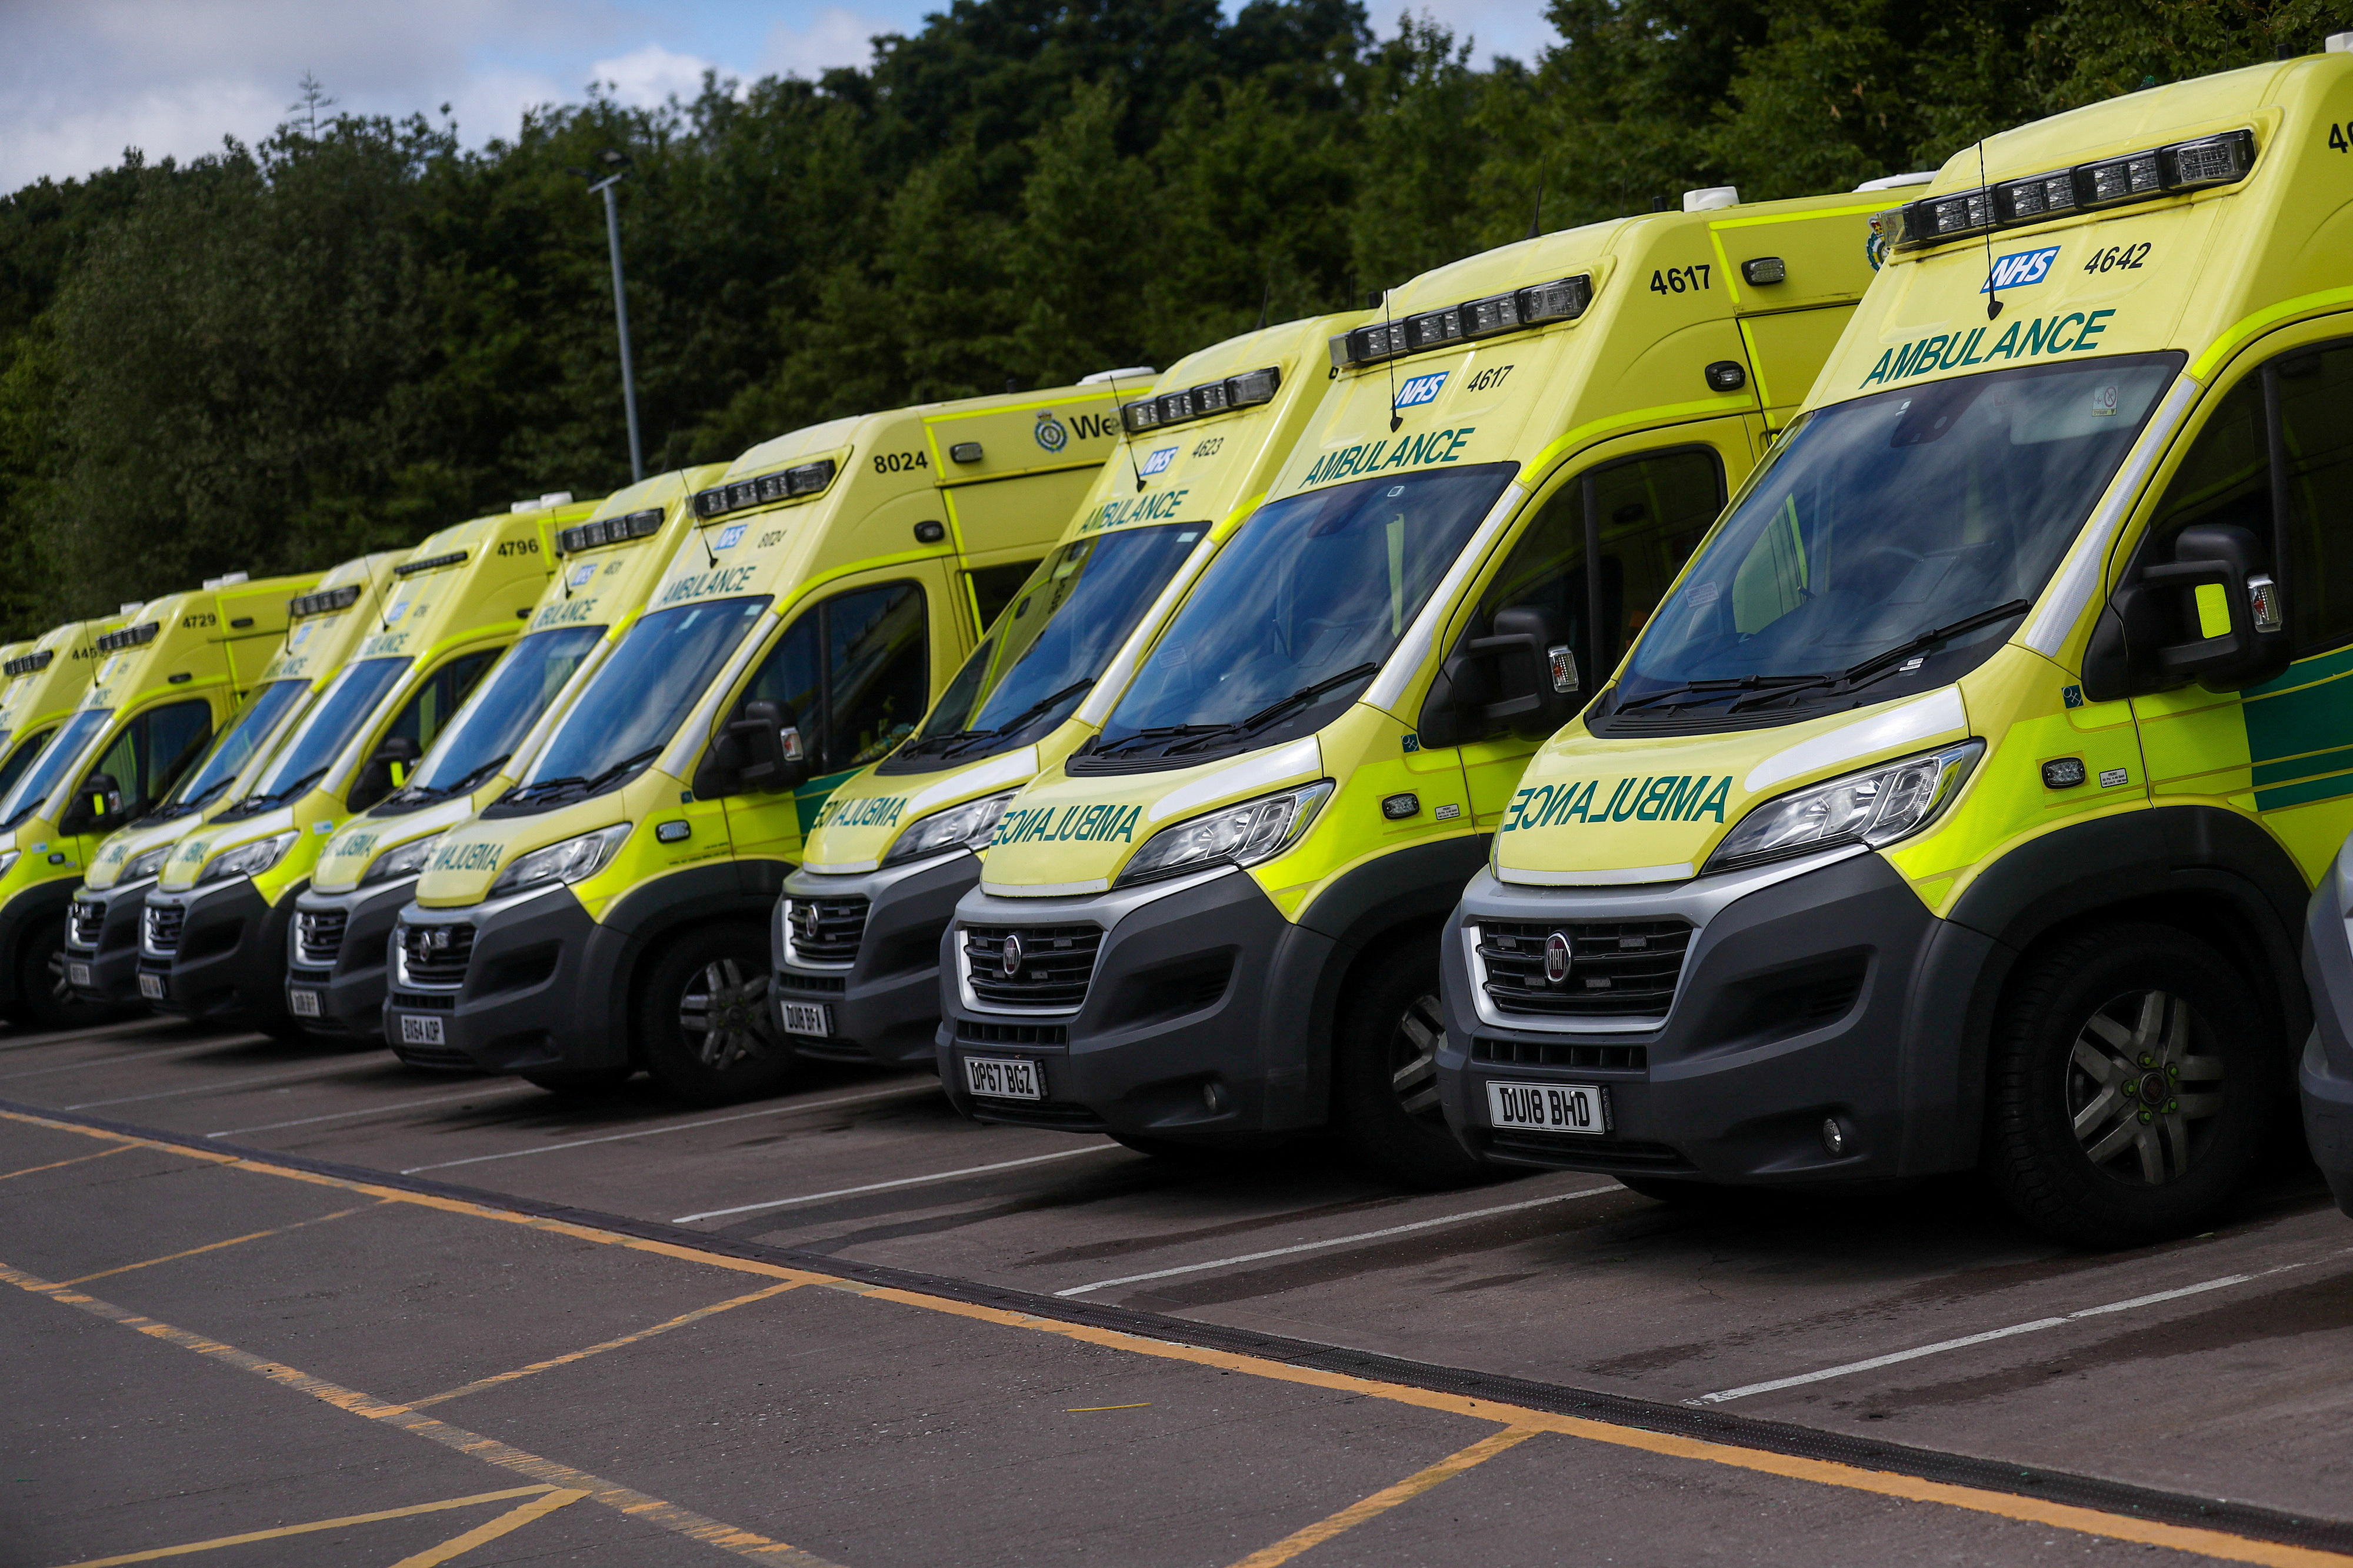 West Midlands Ambulance service